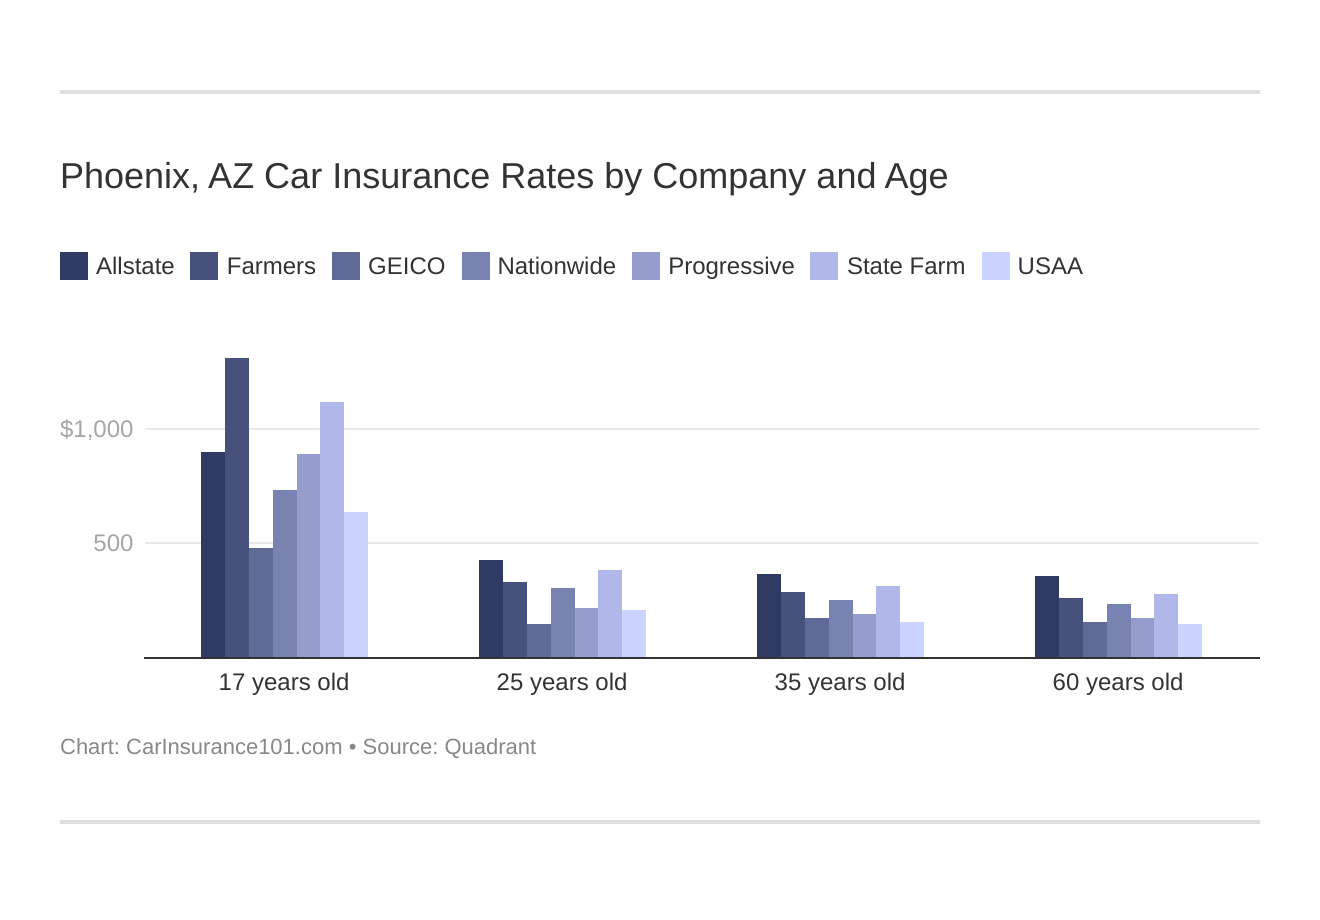 Phoenix, AZ Car Insurance Rates by Company and Age